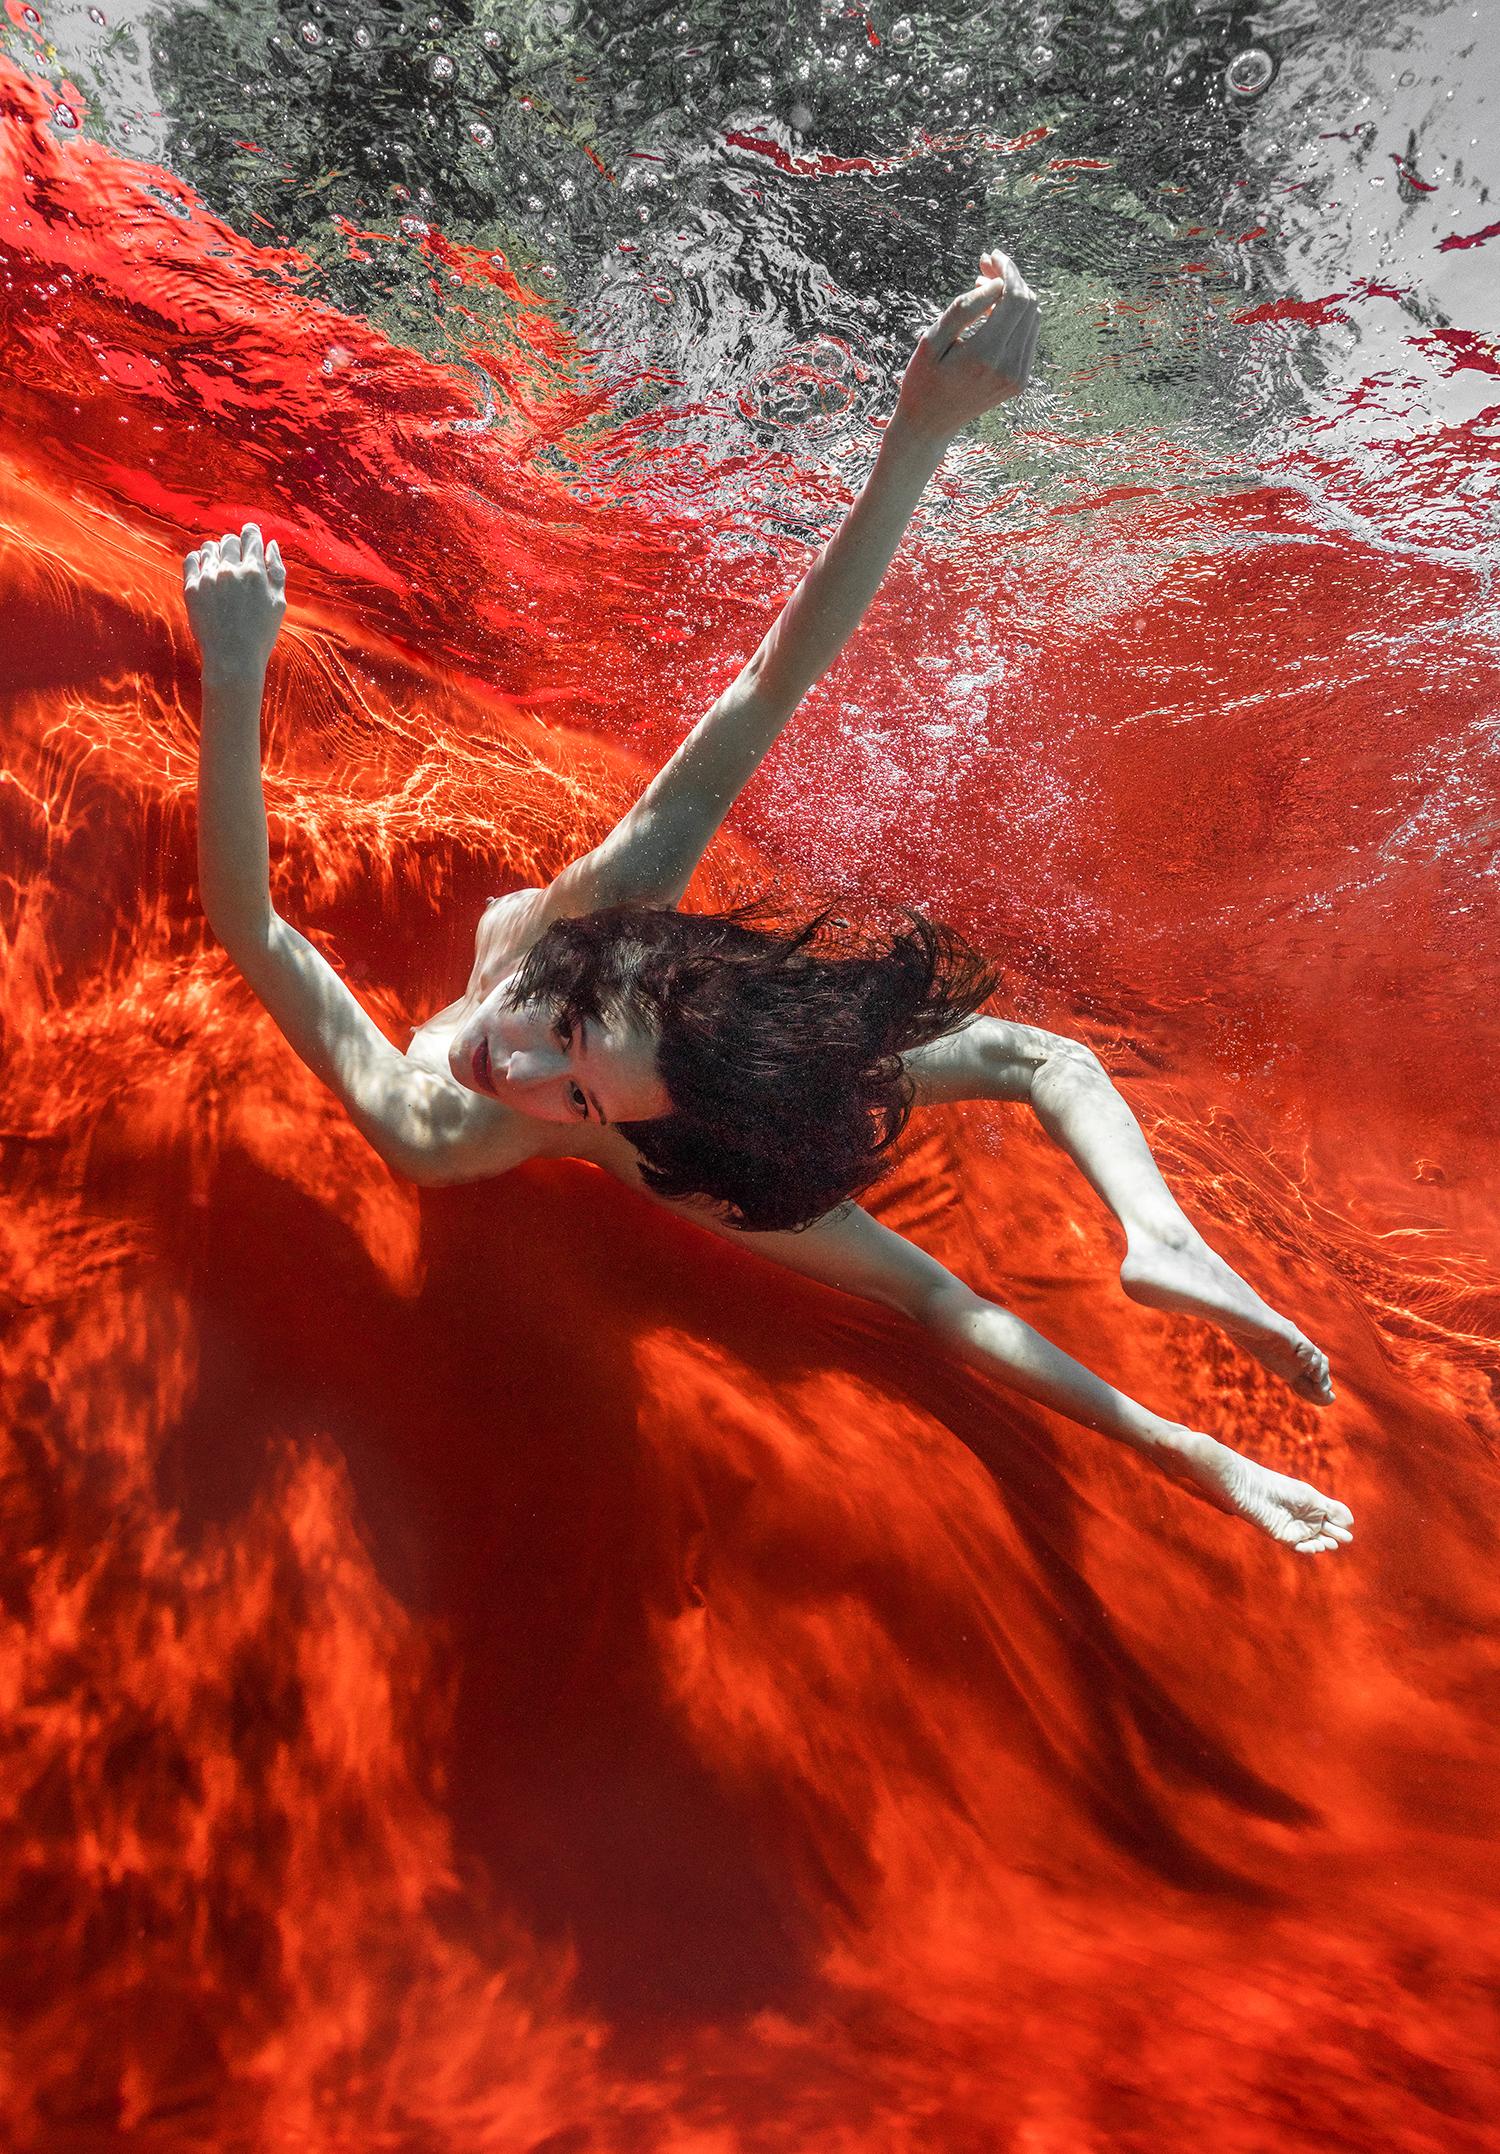 Alex Sher Figurative Photograph - Wild Blood  - underwater nude photograph - archival pigment print 50x35"